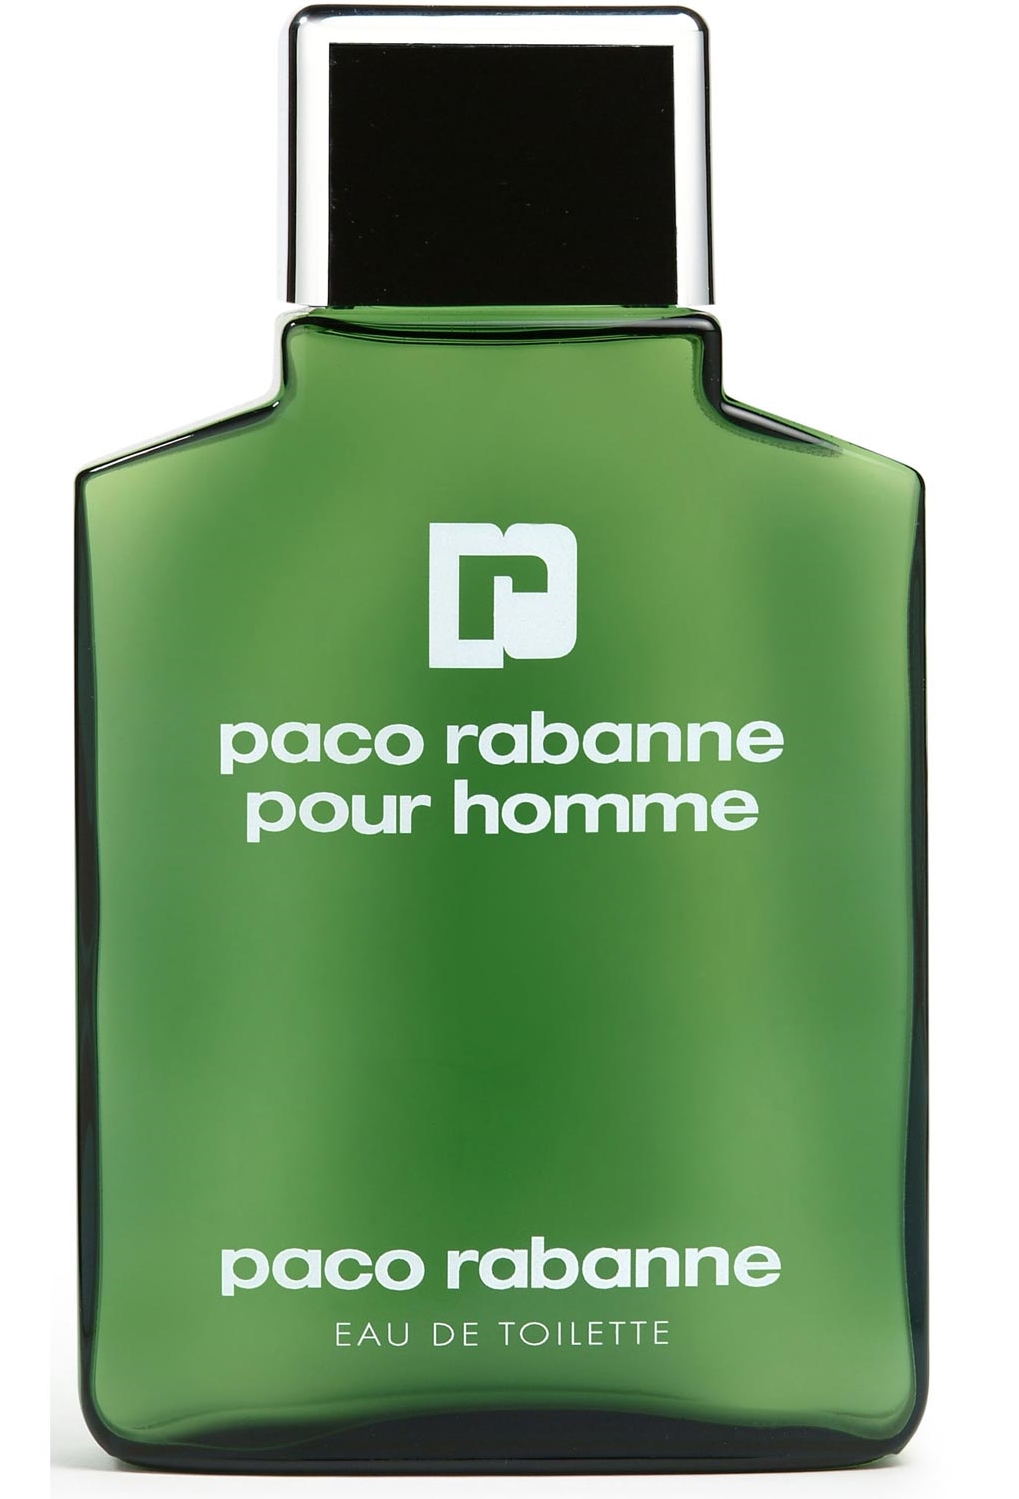 Homme paco. Мужские духи Пако Рабан зеленая. Paco Rabanne Paco Rabanne pour homme 200 мл. Paco Rabanne pour homme campaign. Paco Rabanne туалетная вода Eau pour homme 5 мл.